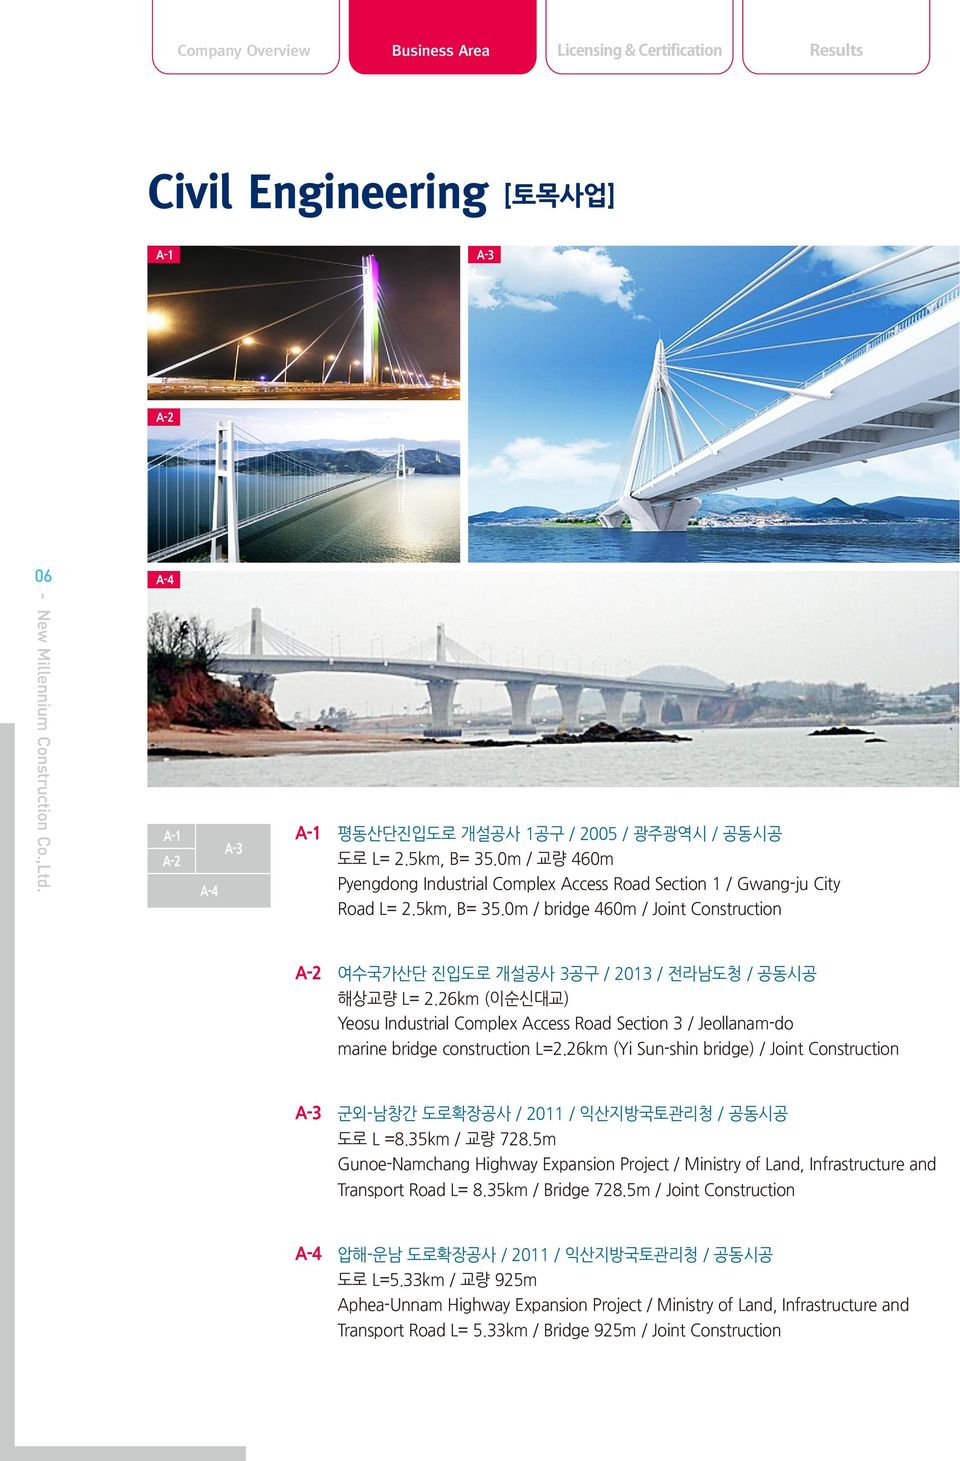 26km (이순신대교) Yeosu Industrial Complex Access Road Section 3 / Jeollanam-do marine bridge construction L=2.